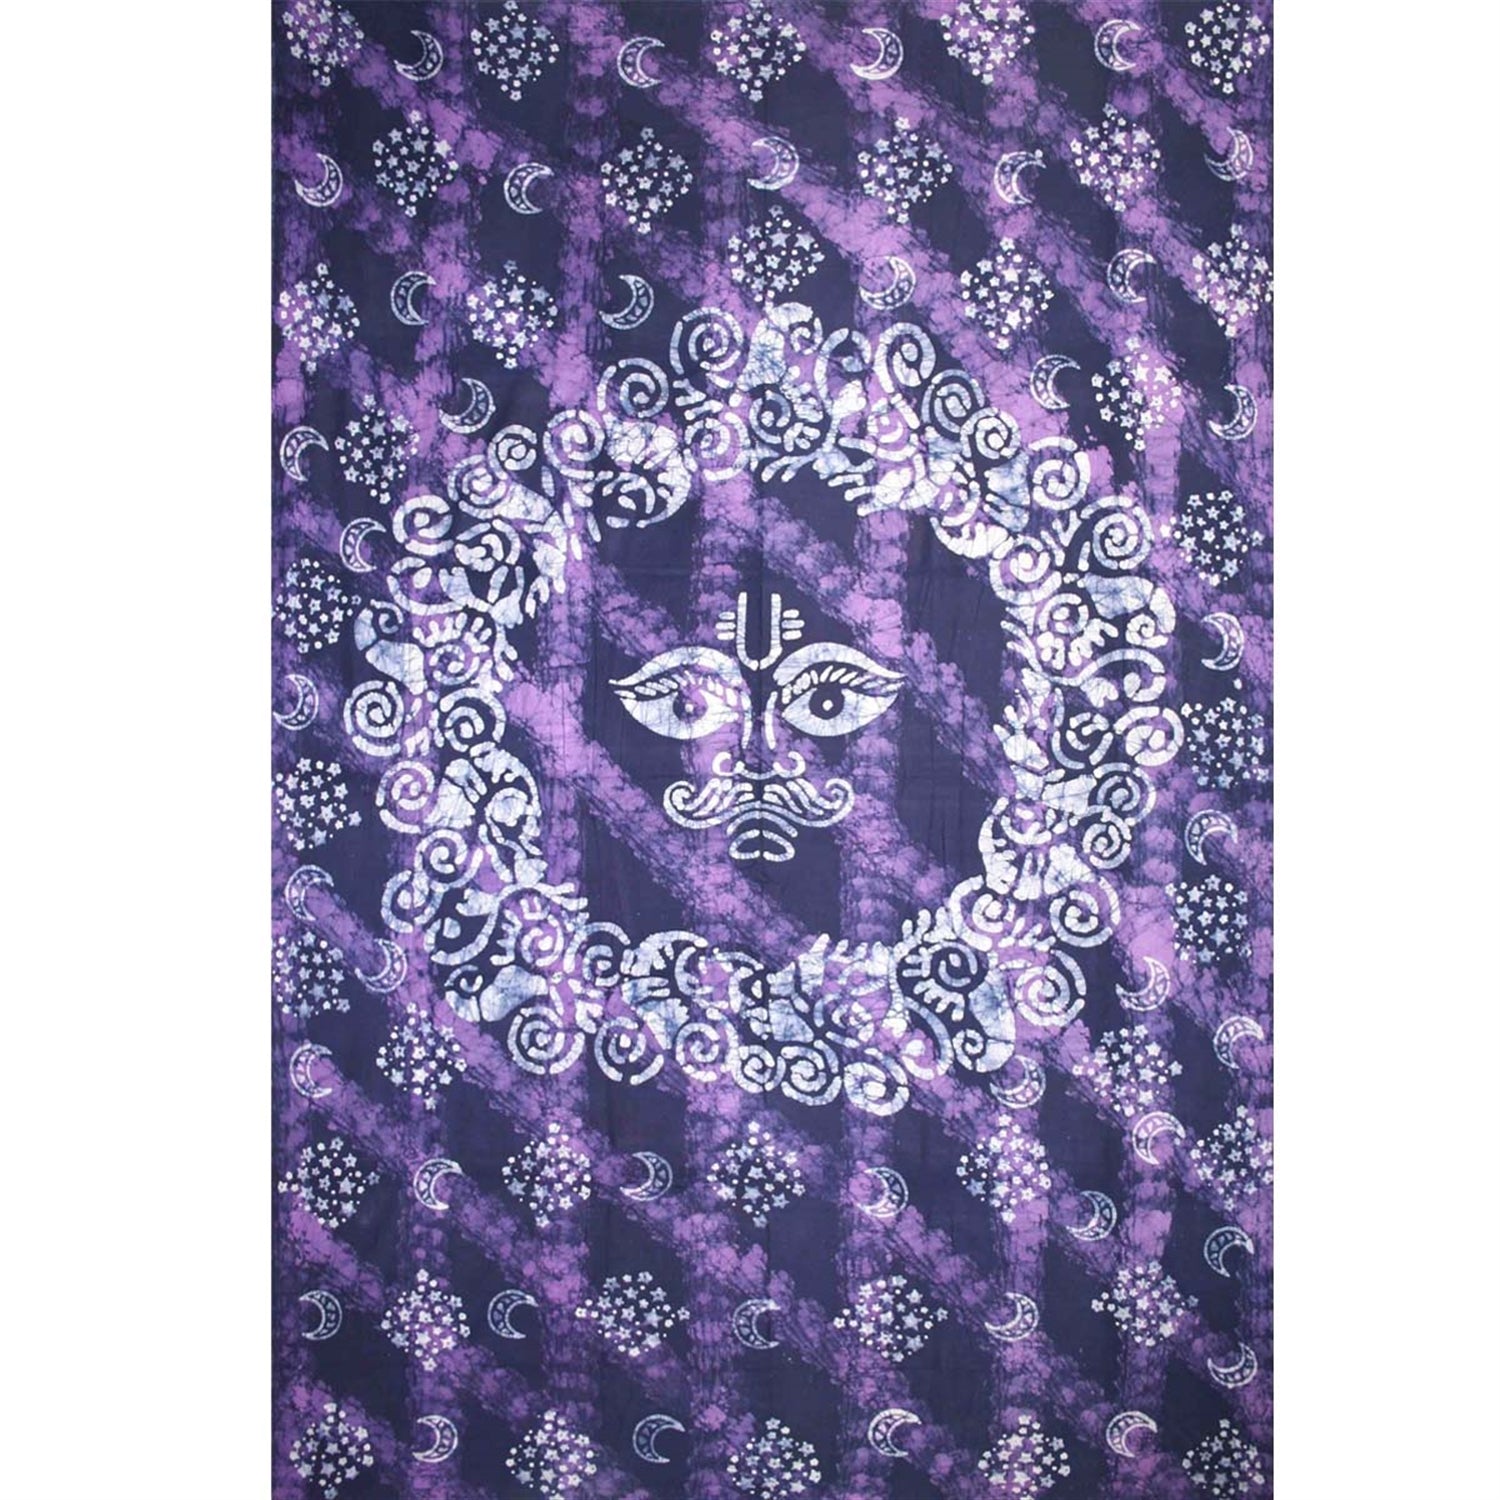 Hemelse batik tapijt katoen verspreid 106 "x 72" Twin paars 